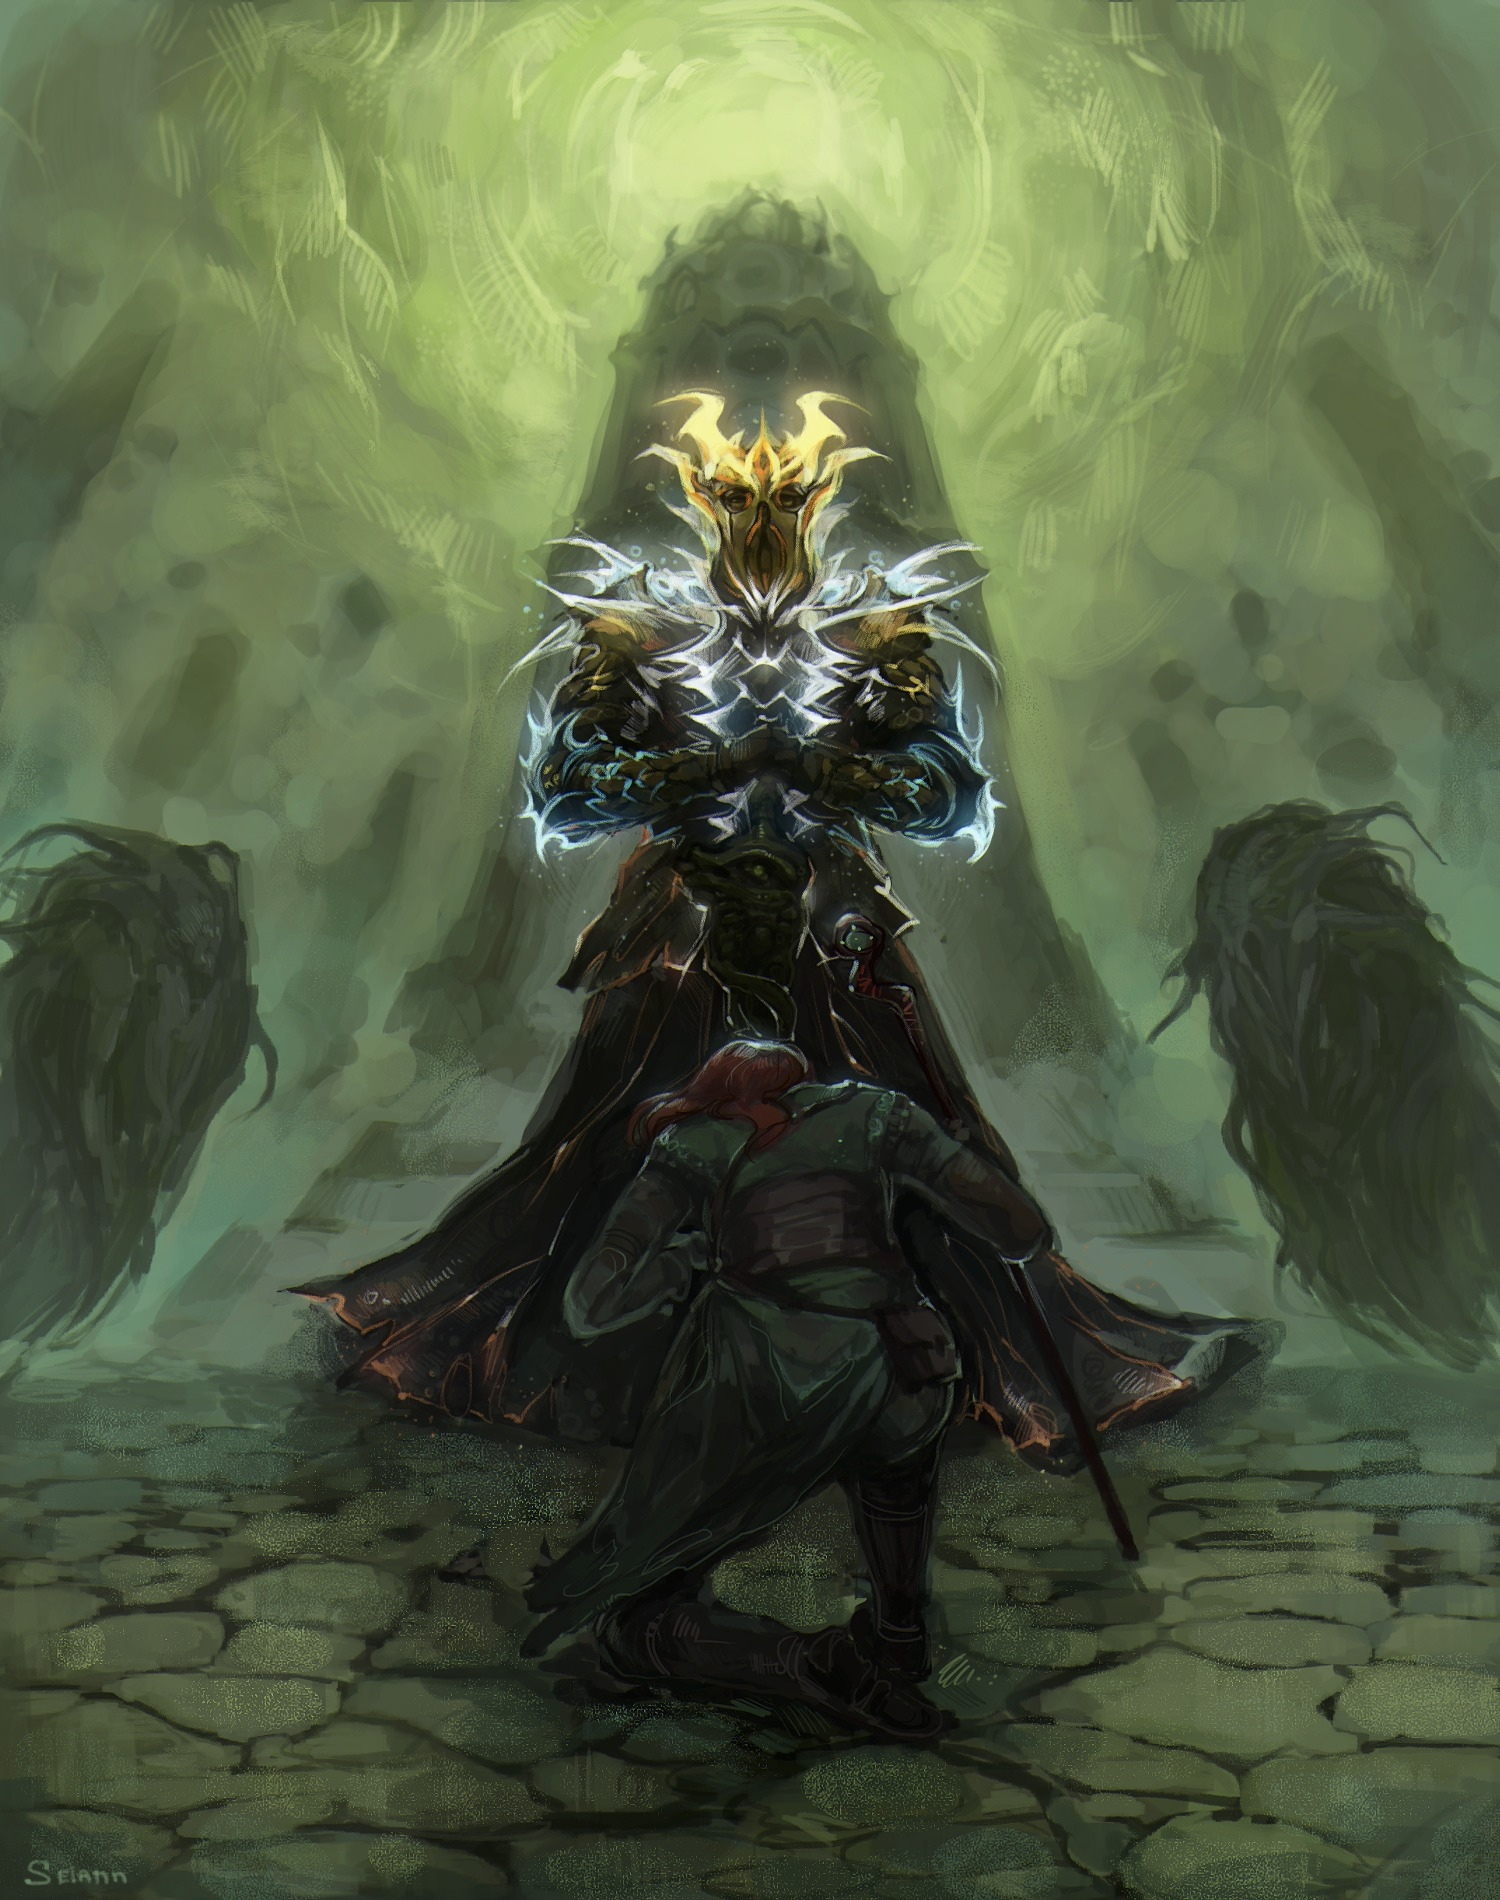 First Dragonborn - The elder scrolls, Skyrim, Miraak, Art, Games, Computer games